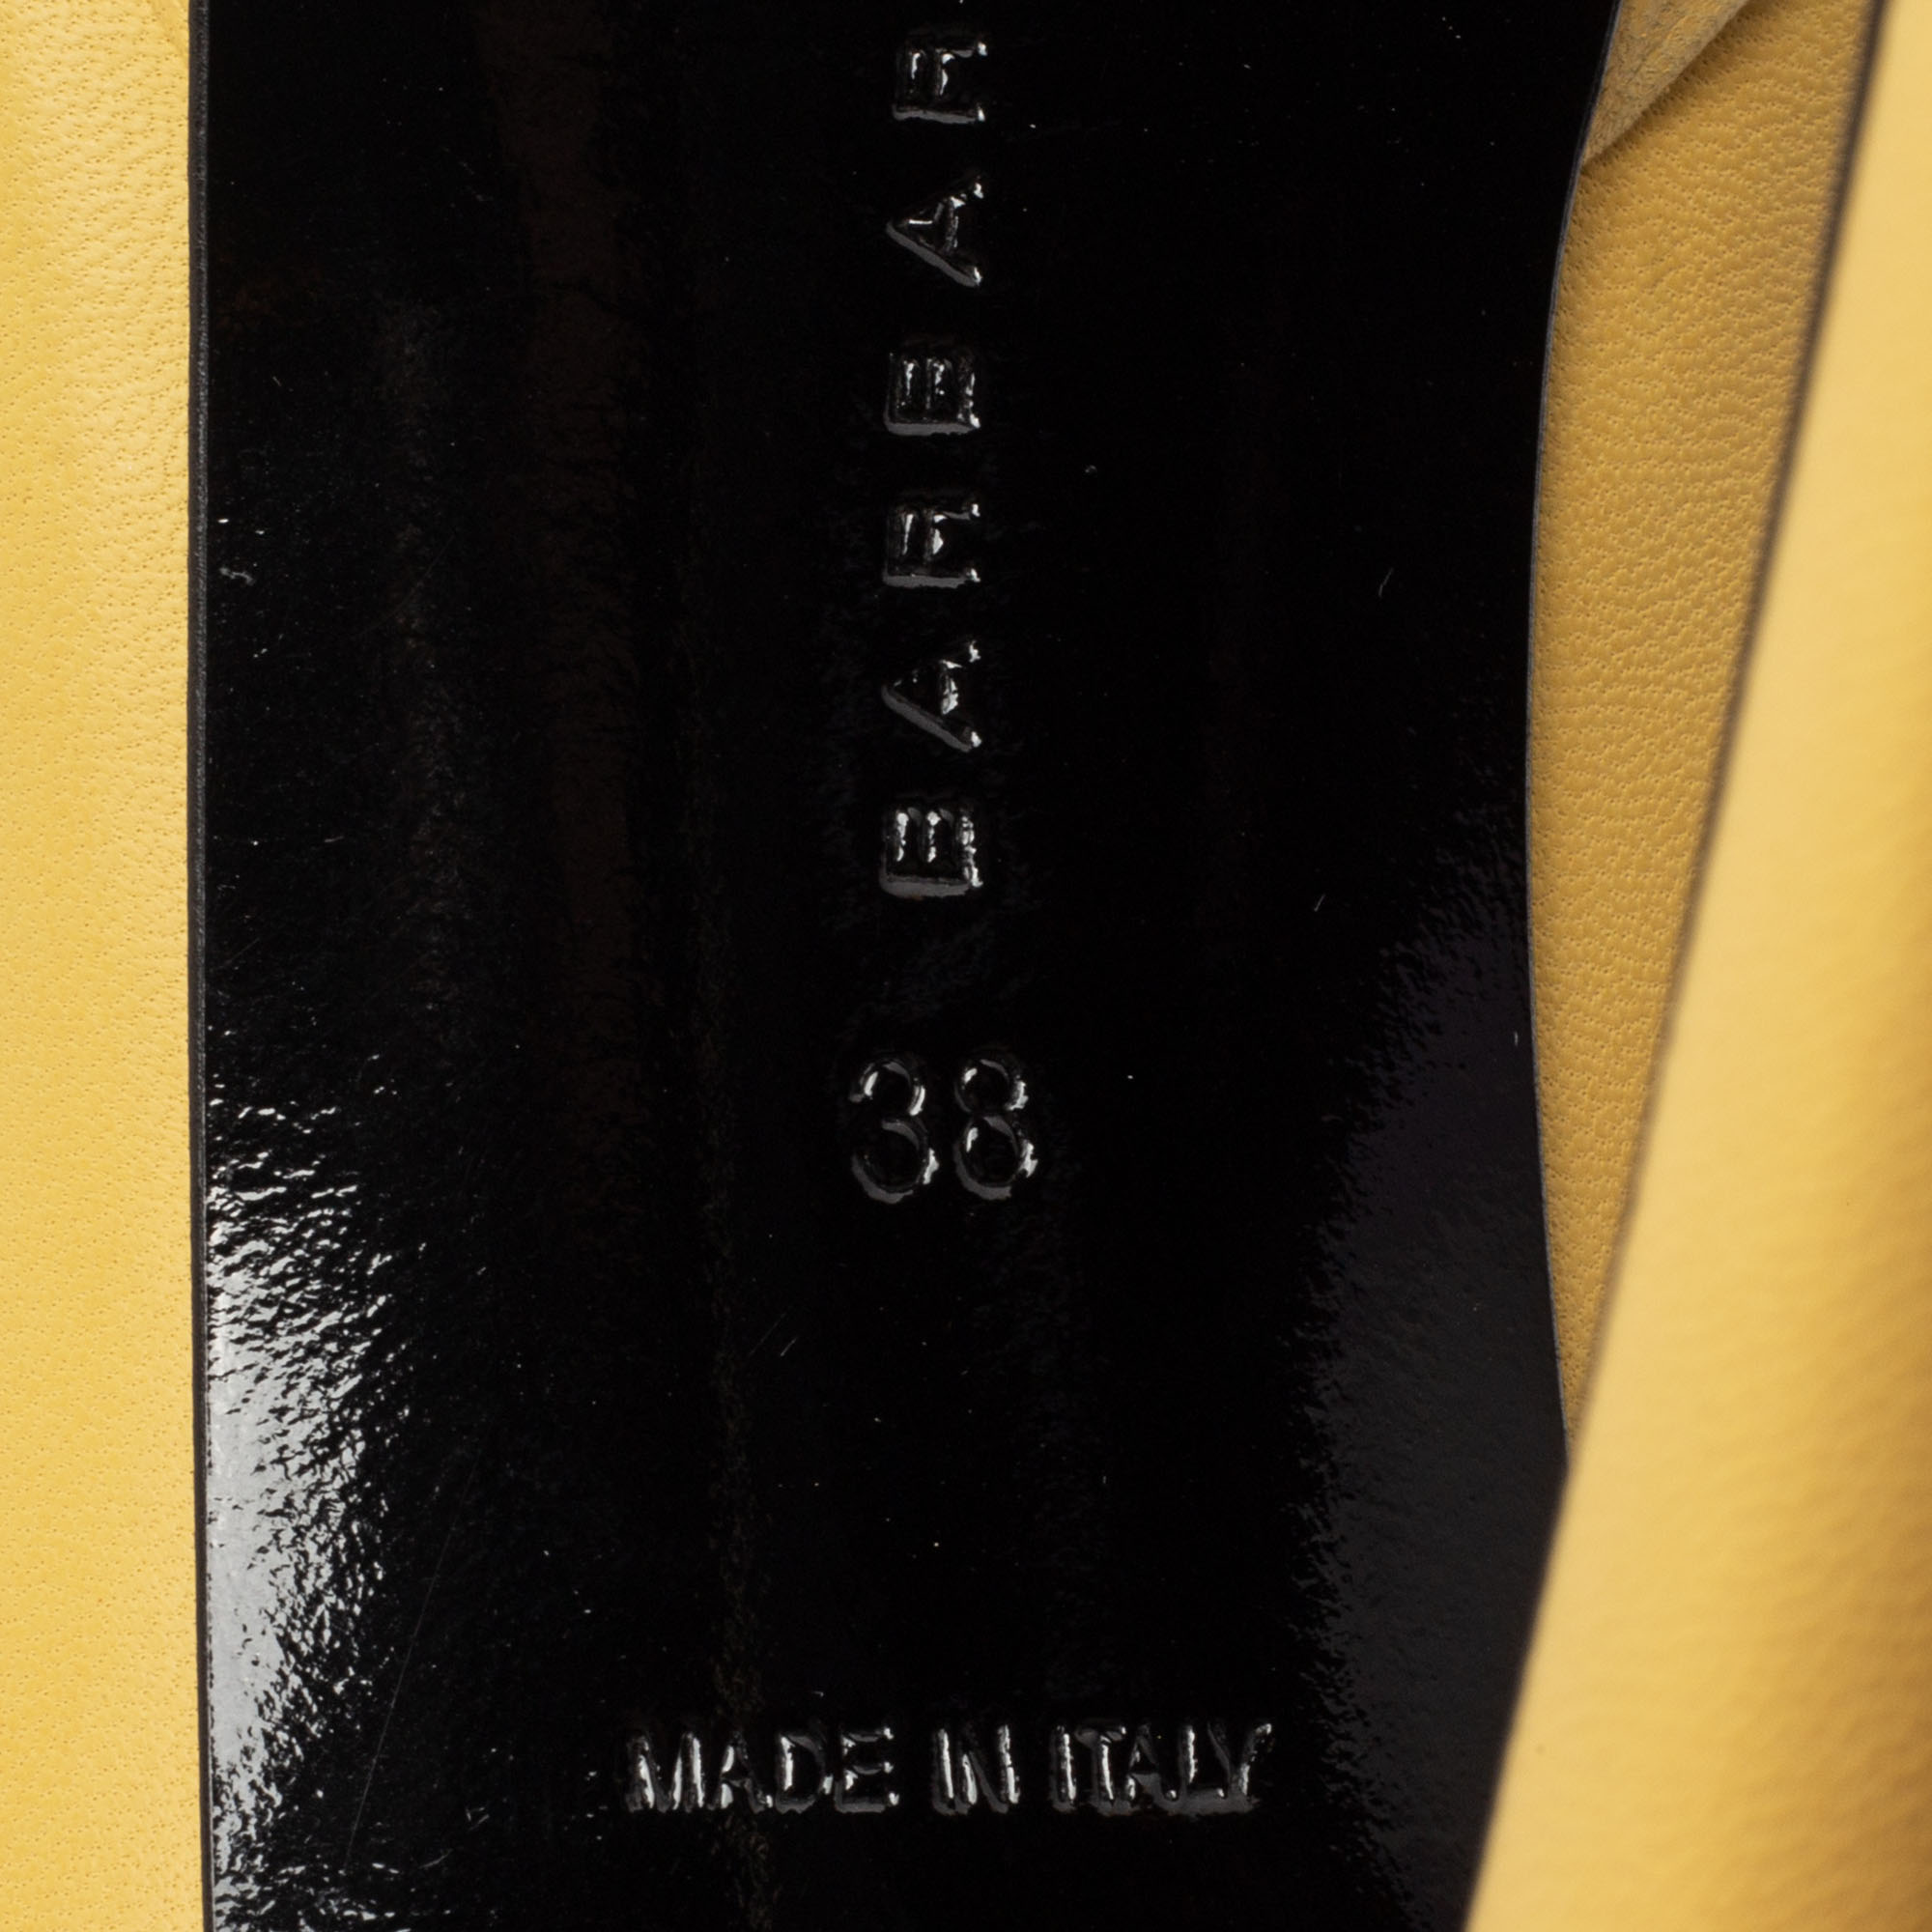 Barbara Bui Yellow Leather Platform Pumps Size 38